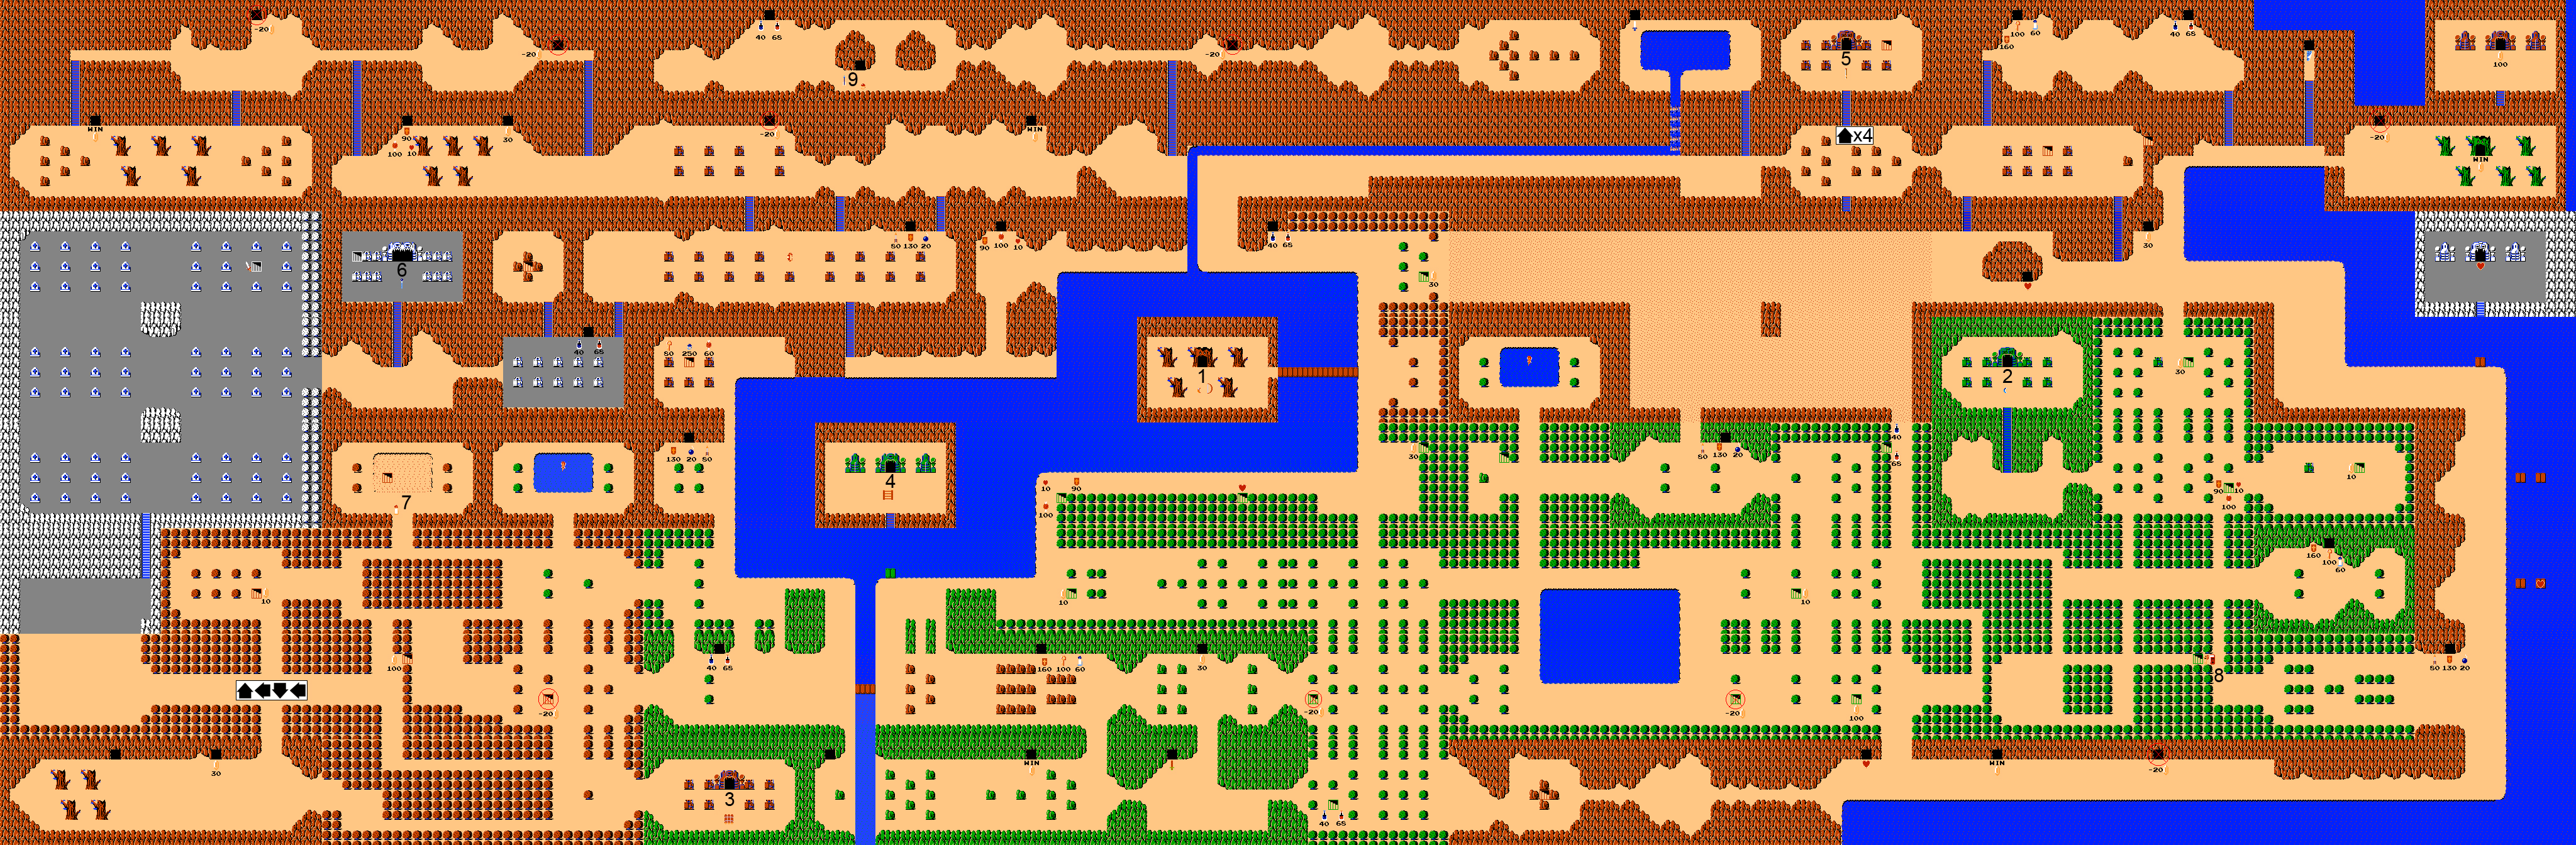 NES Zelda Map by Insider1138 4096x1344